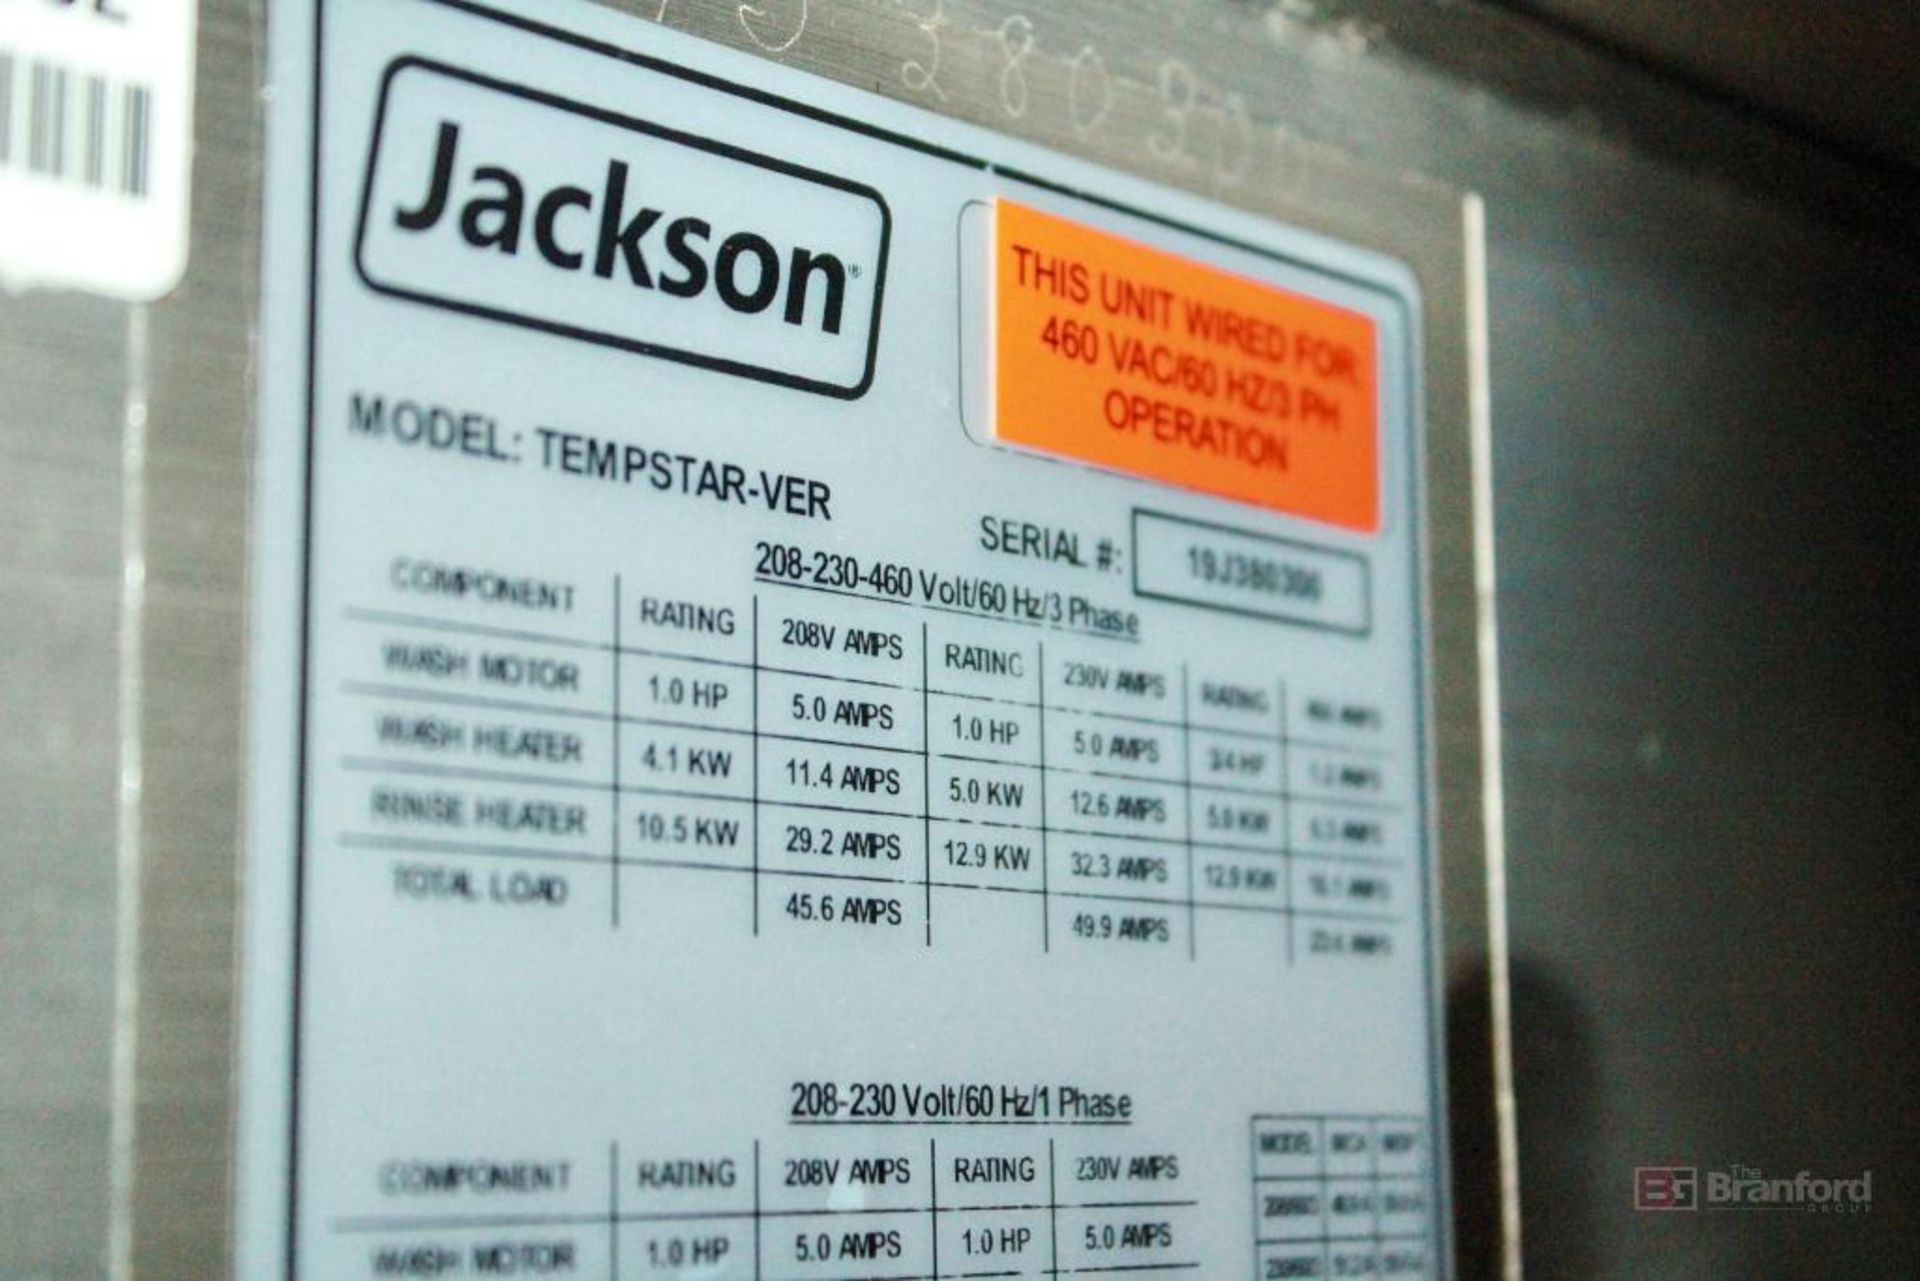 Jackson TEMPSTAR Commercial Dishwasher Model Tempstar-VER - Image 8 of 10